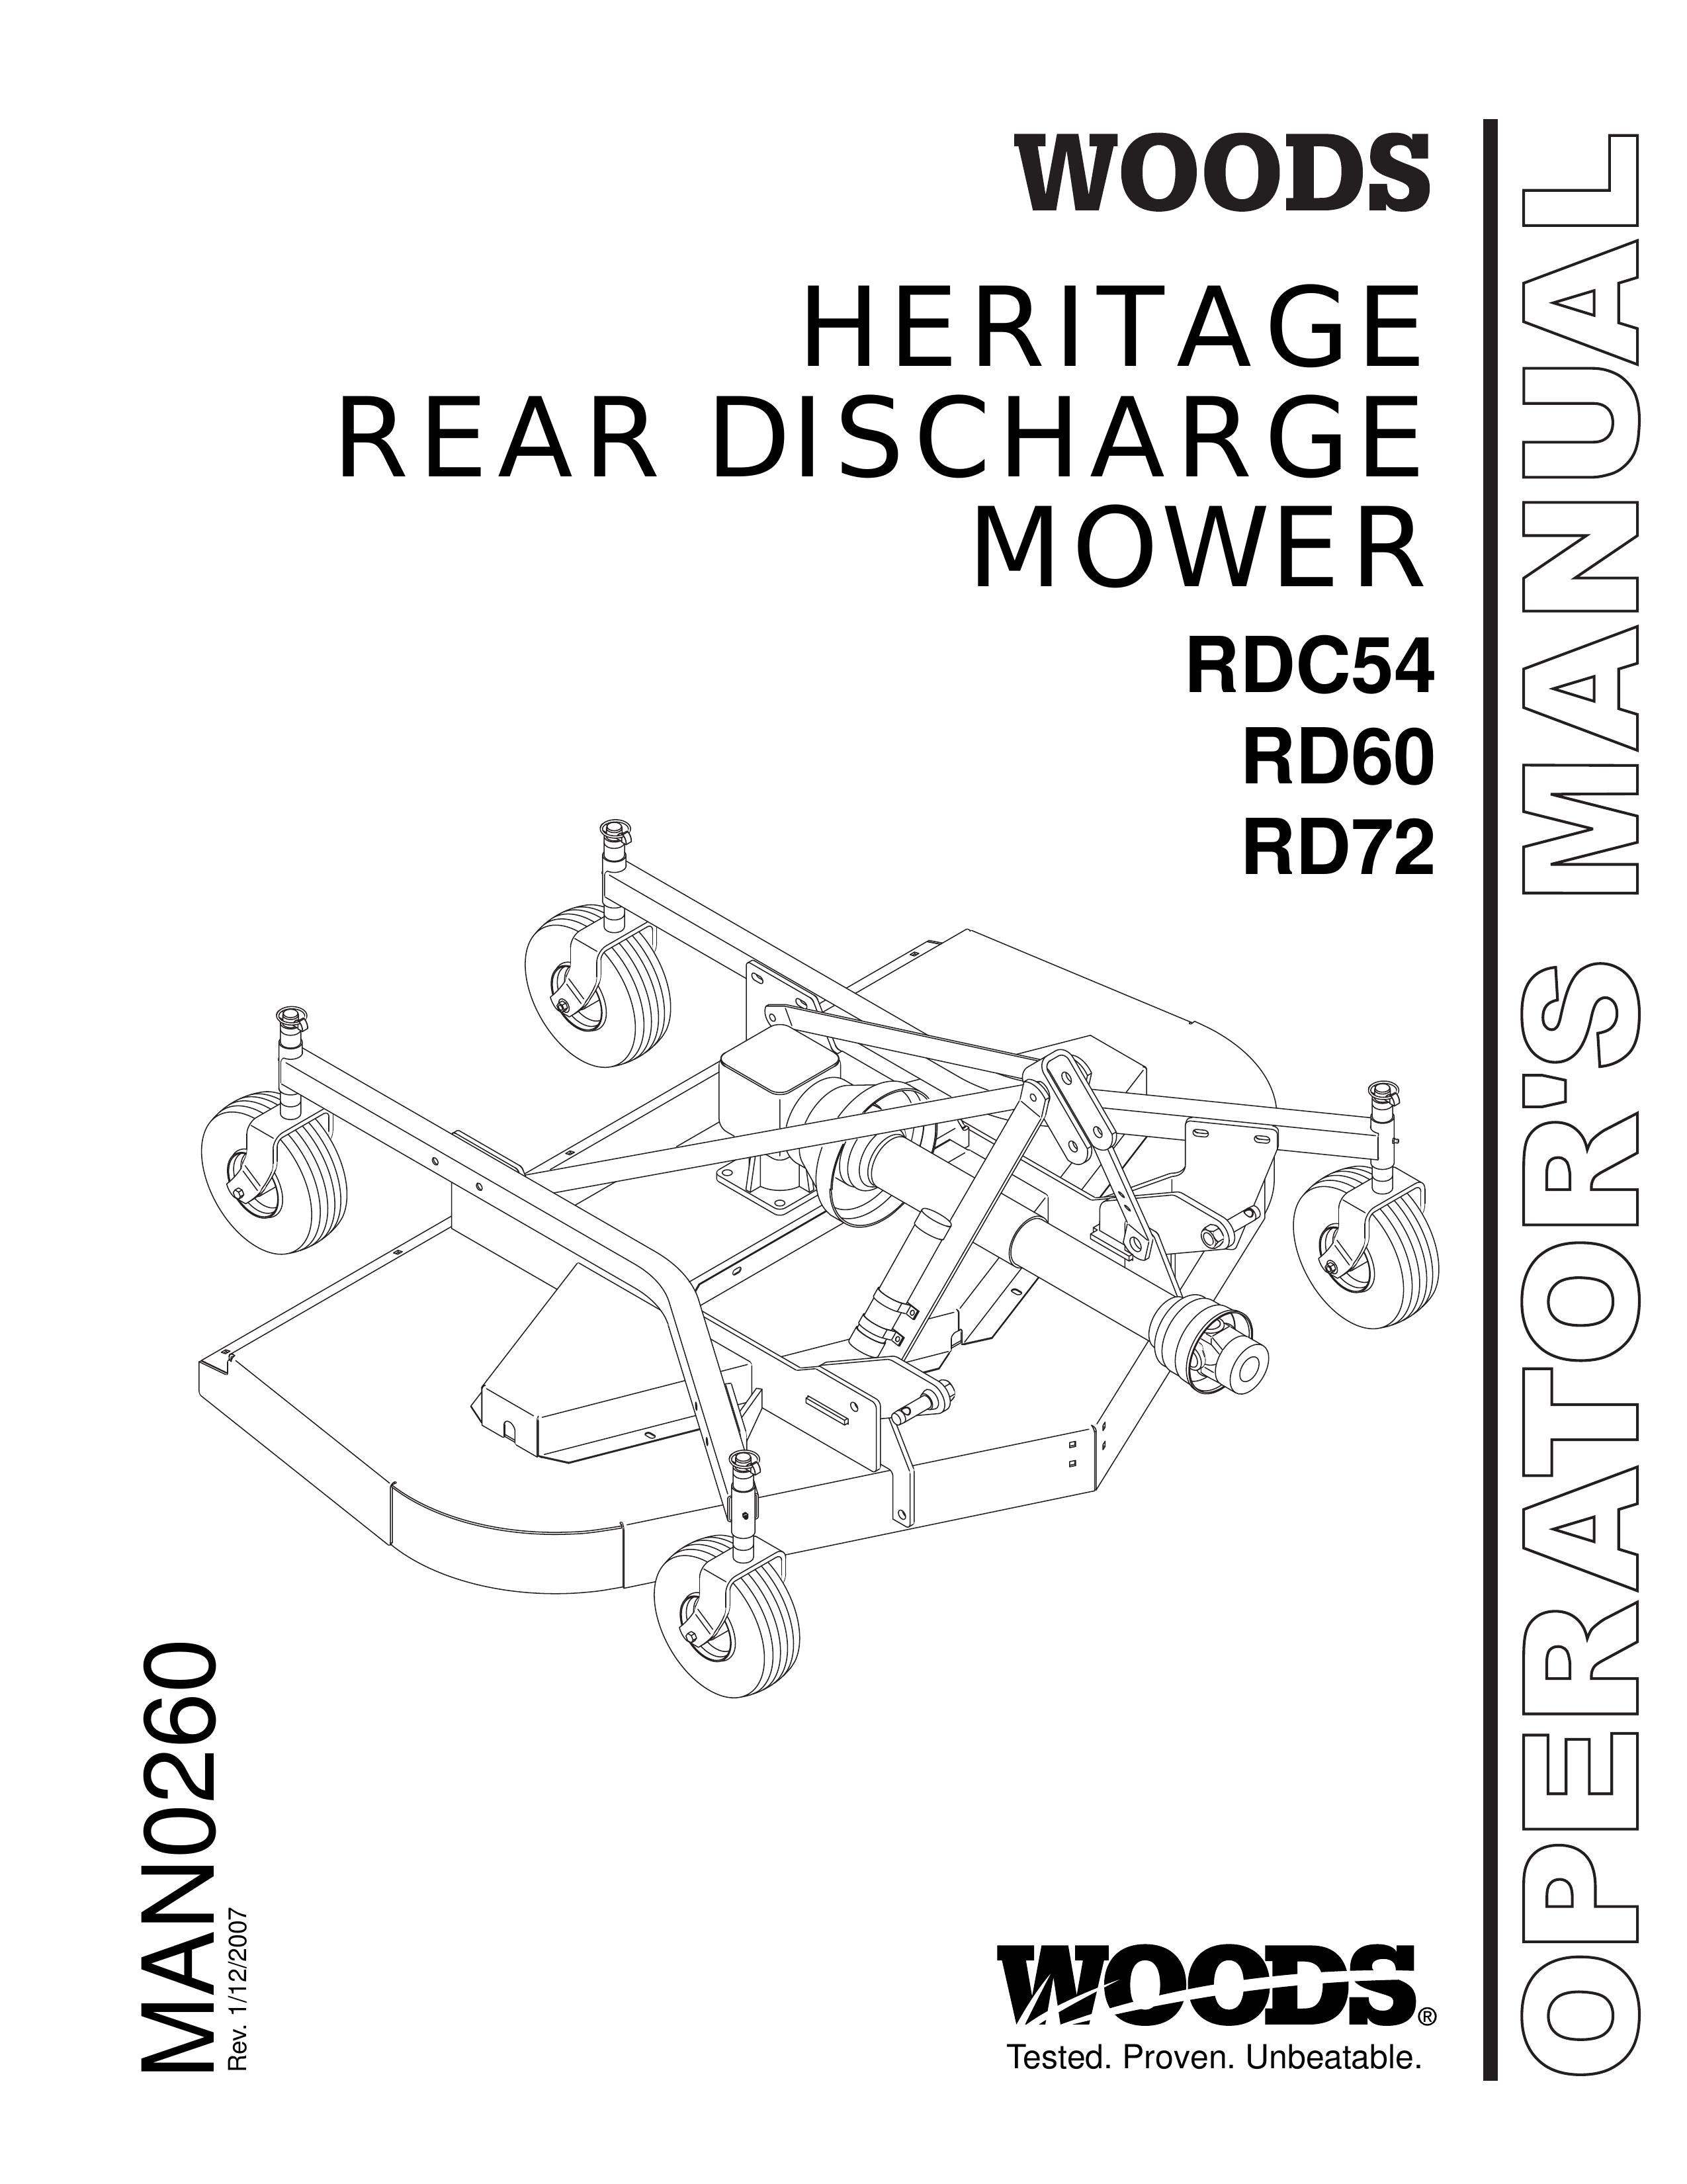 Woods Equipment RDC54 Lawn Mower User Manual